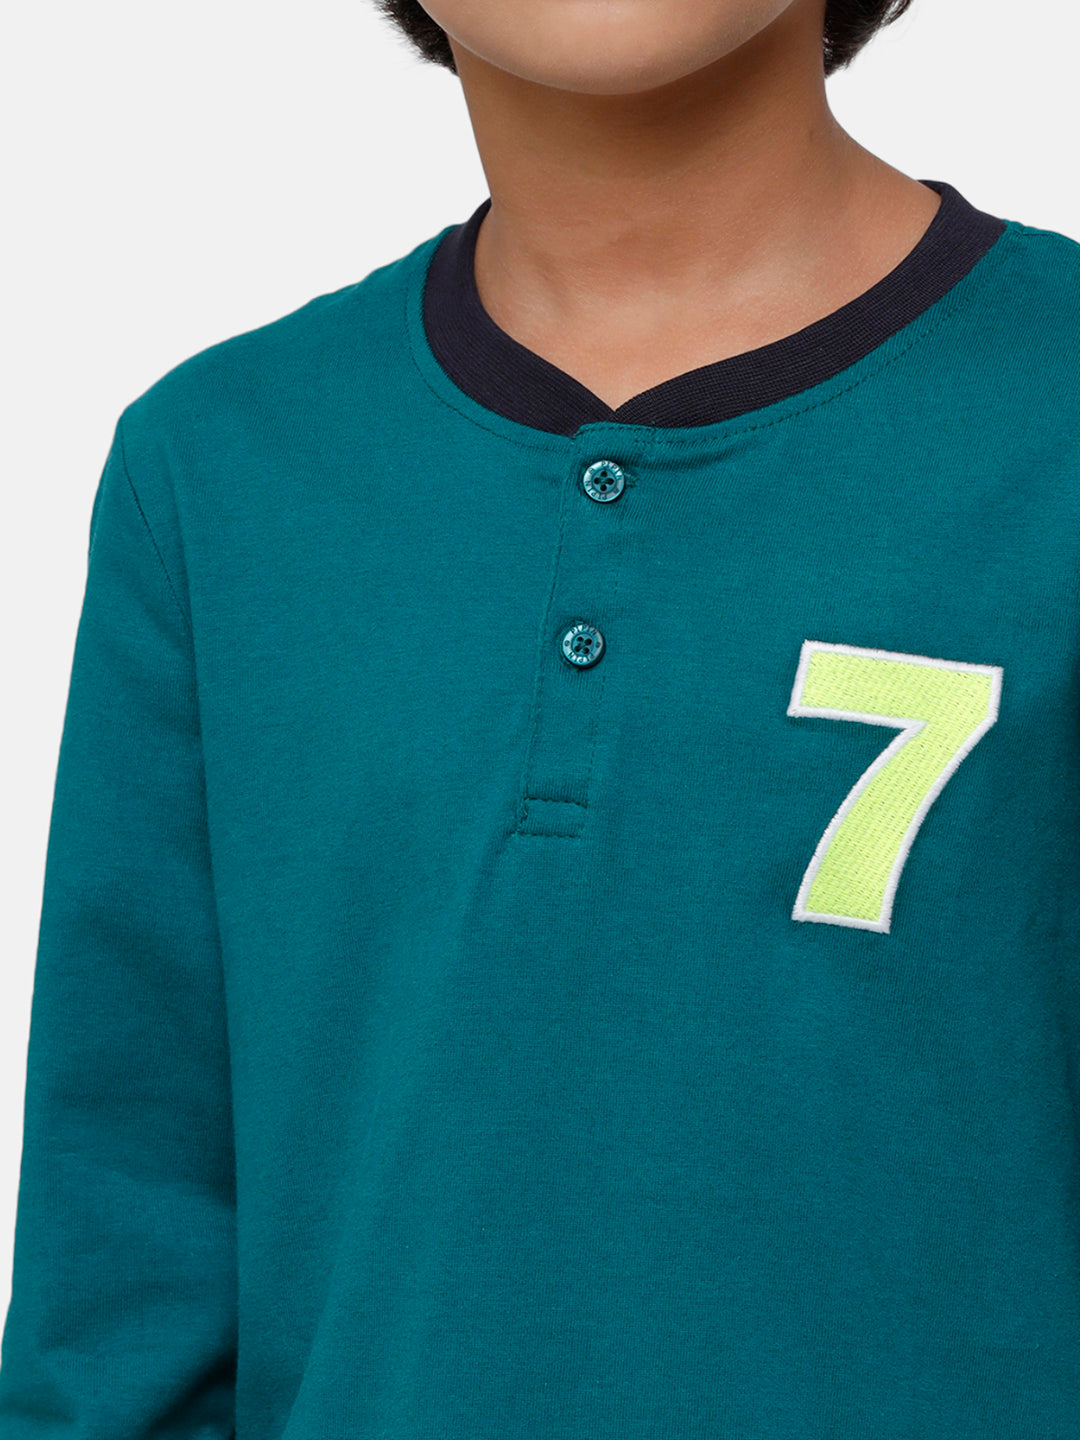 Kids - Boys Printed Full Sleeve T-Shirt Teal Green